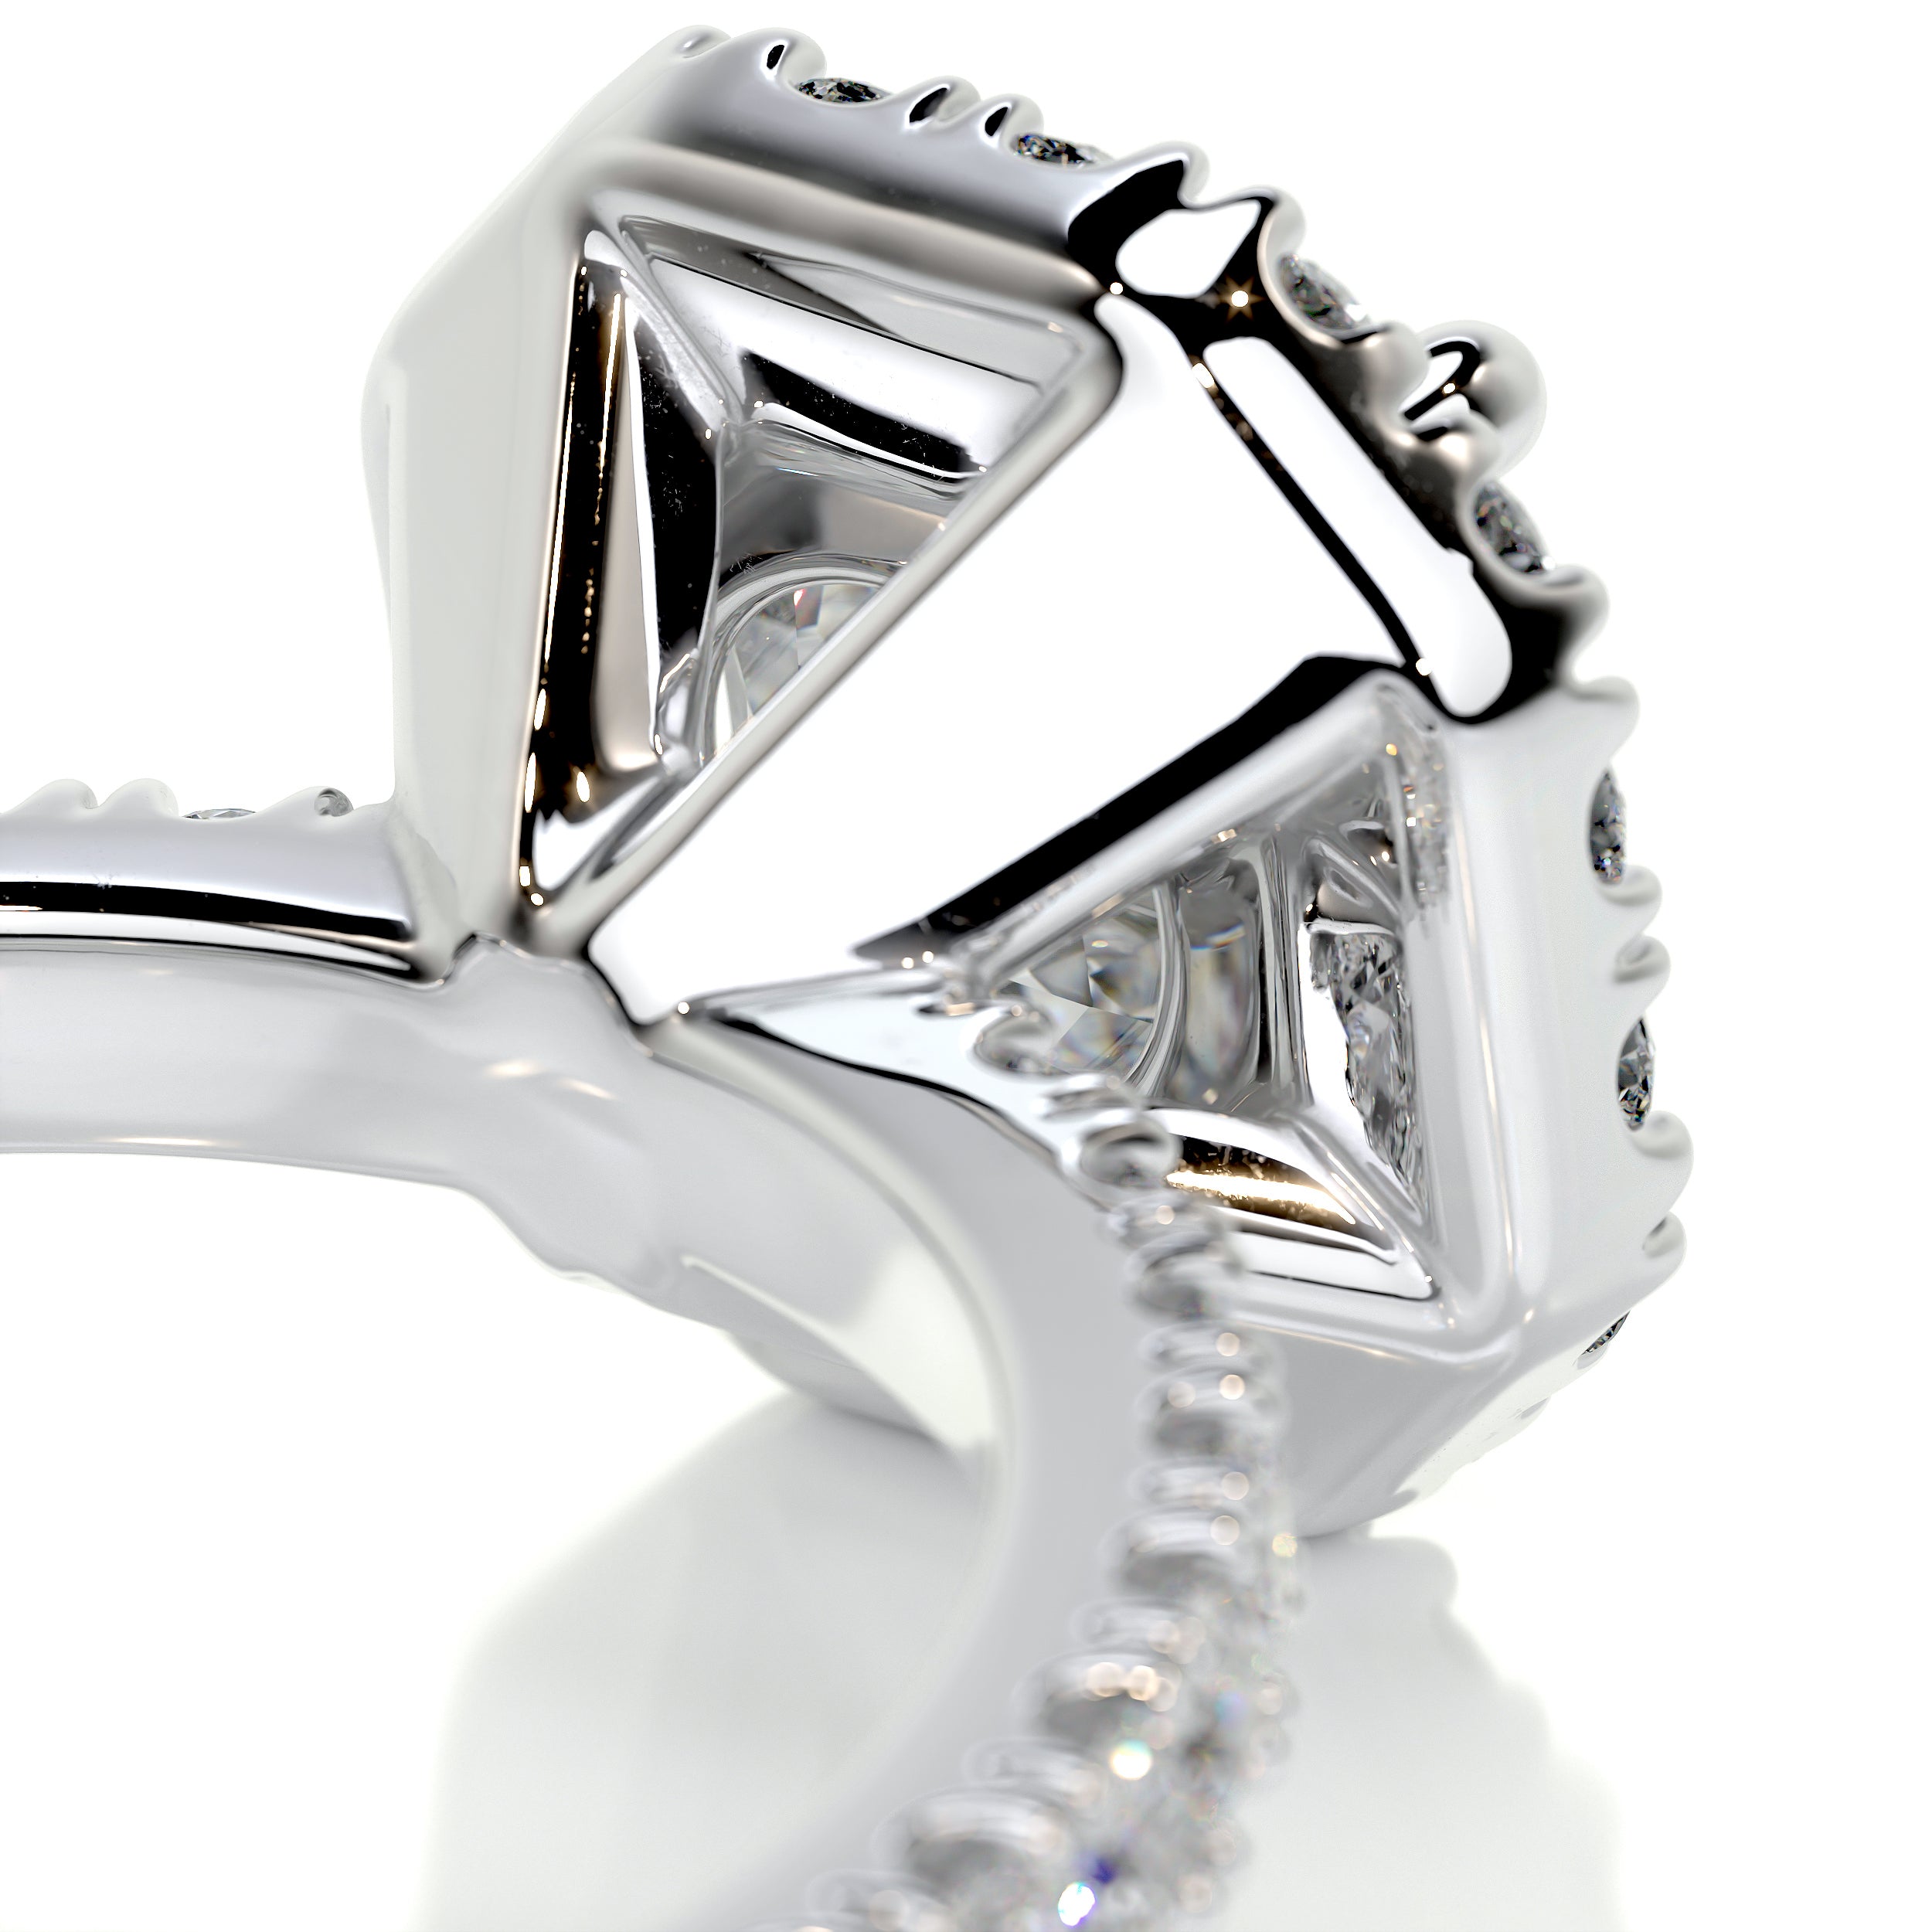 Brooklyn Diamond Engagement Ring -14K White Gold